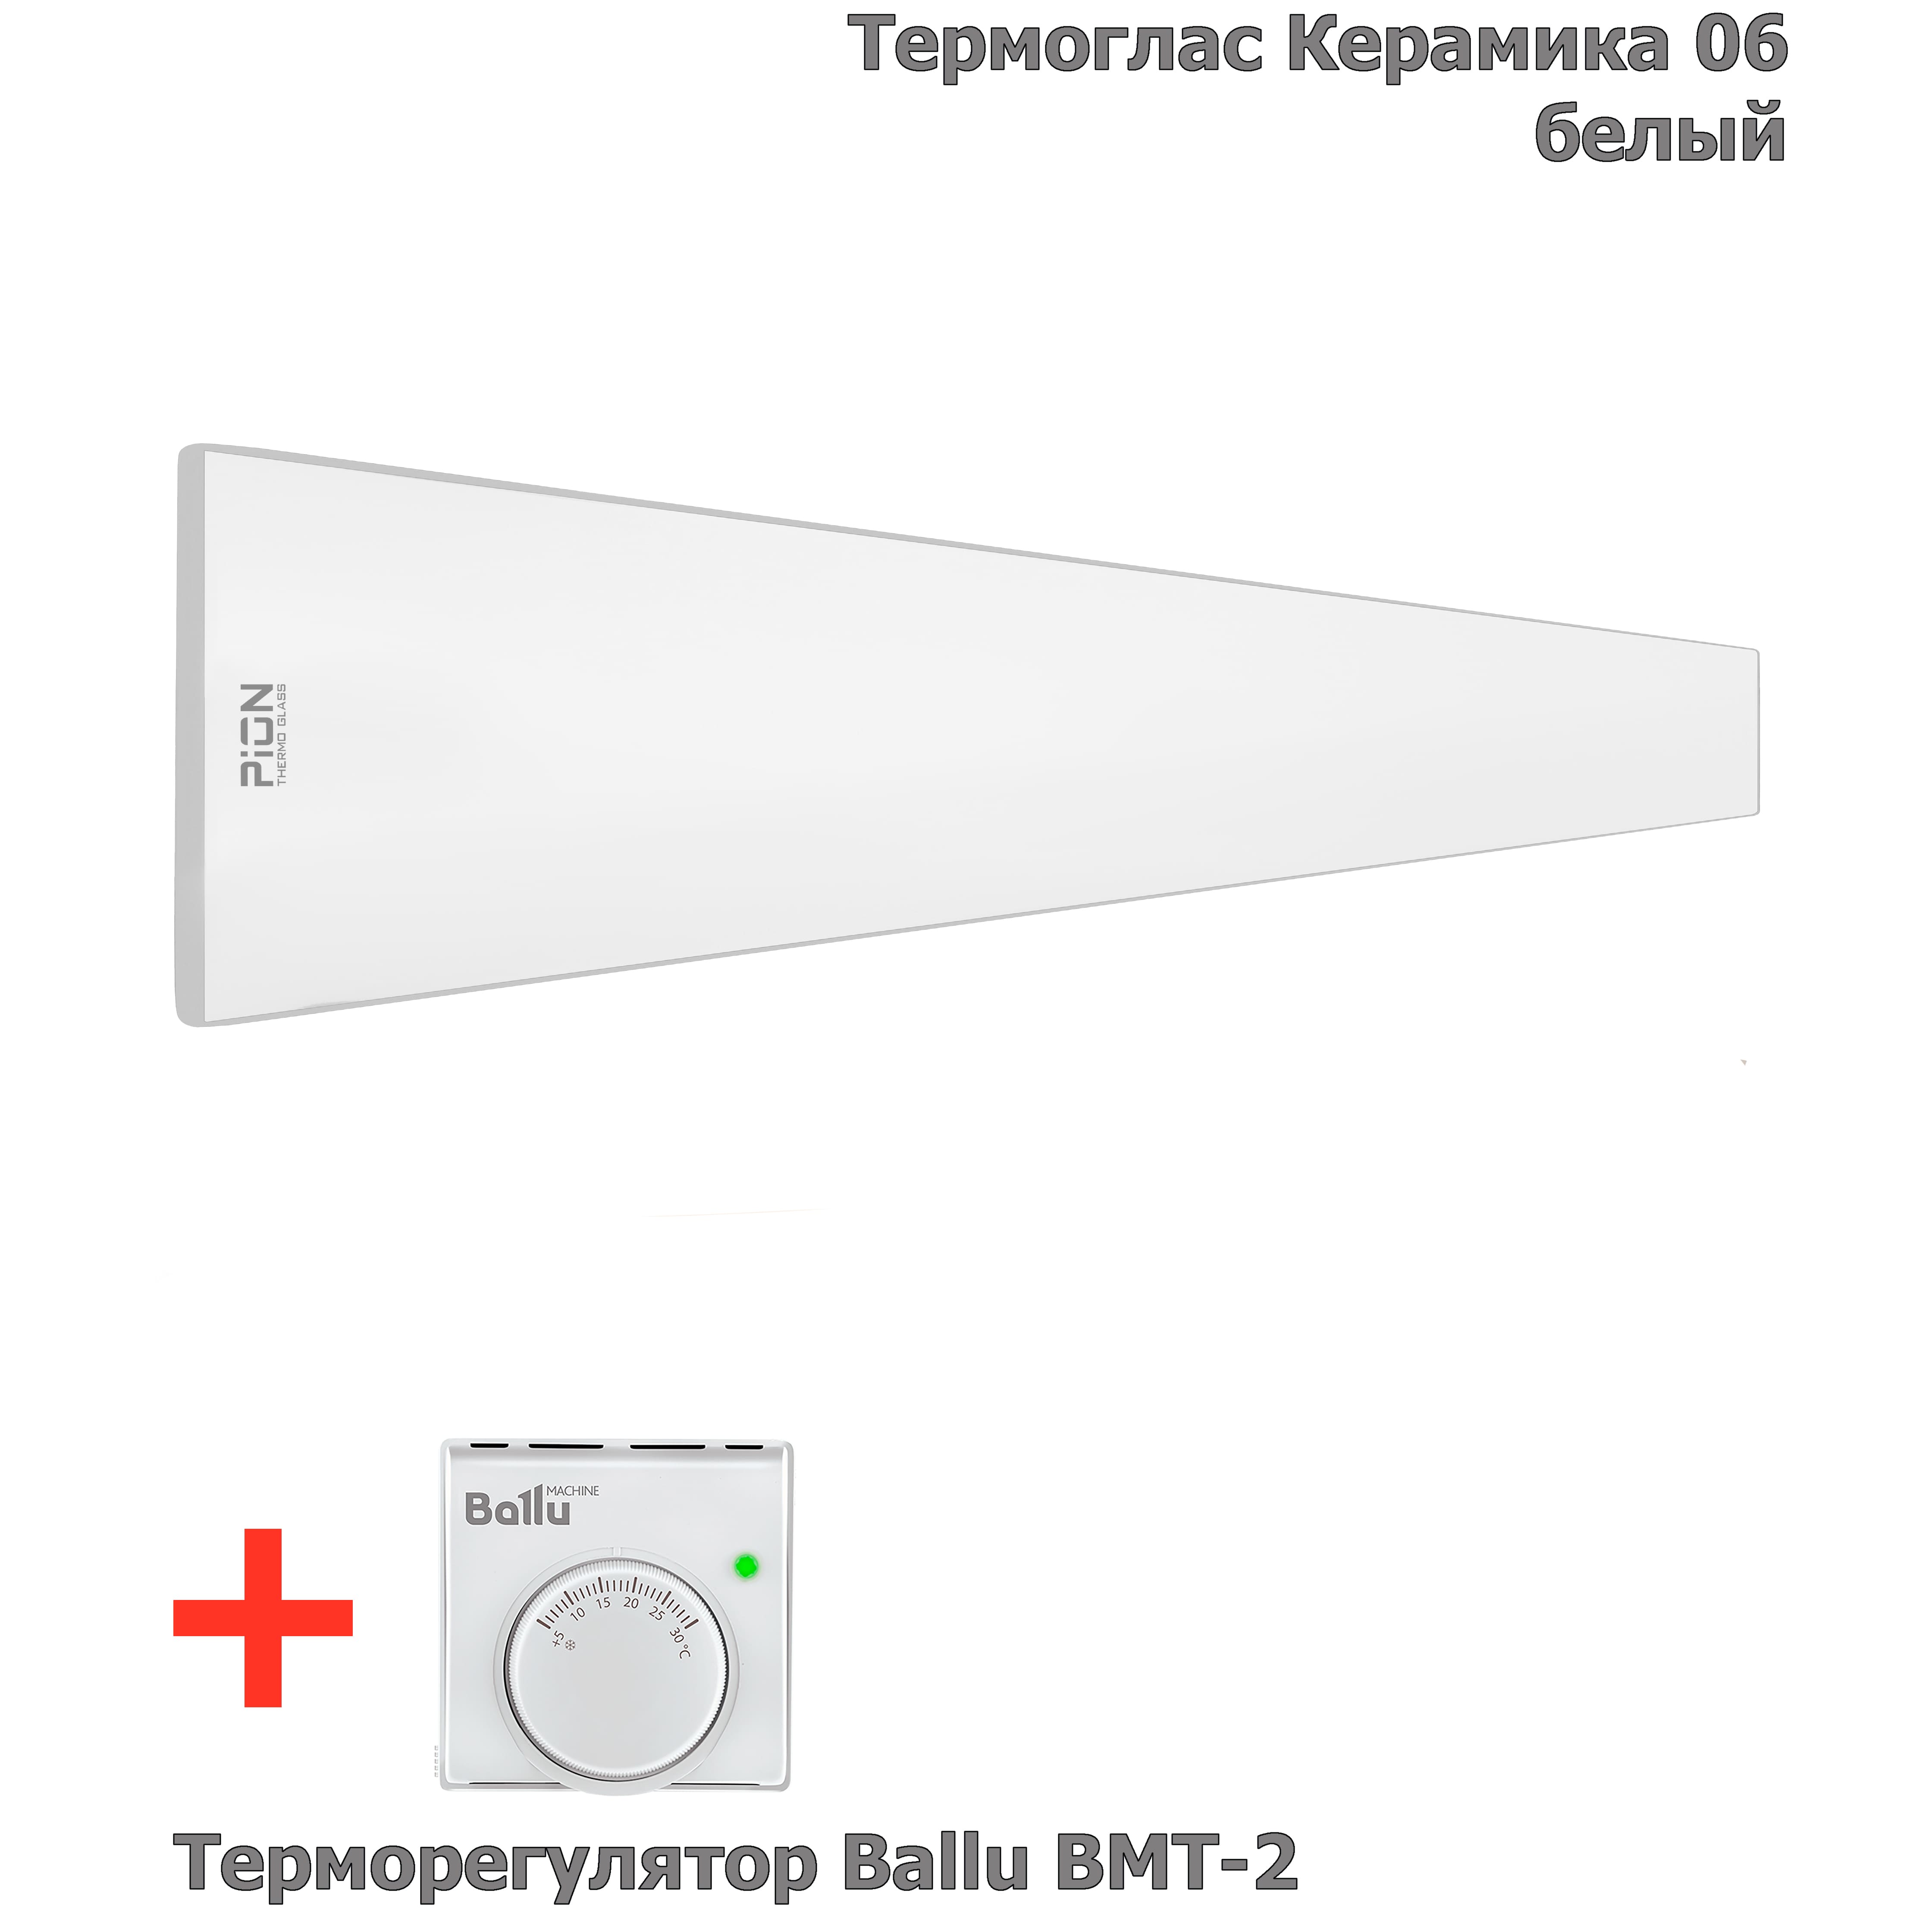 Потолочный обогреватель ПИОН Термоглас Керамика 06 с терморегулятором Ballu BMT-2